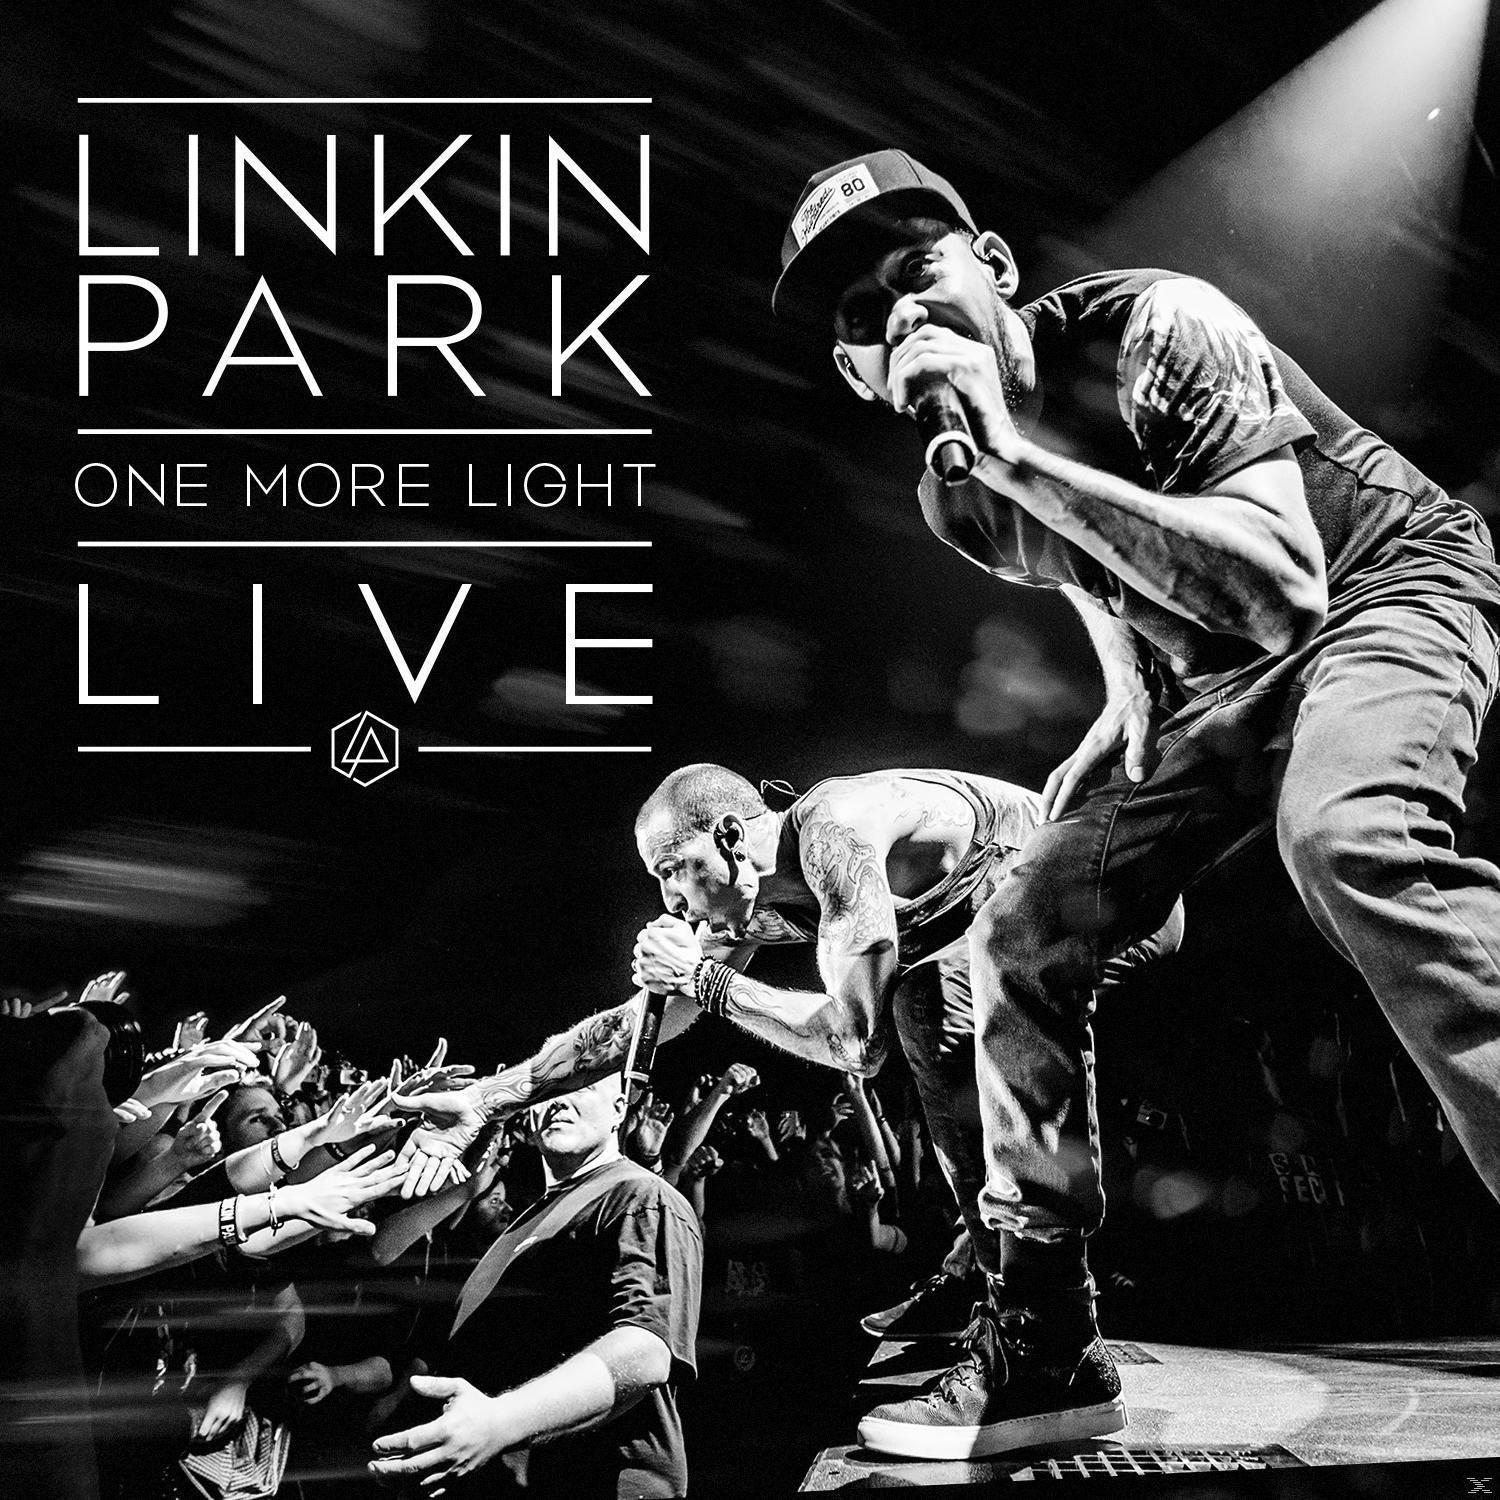 Park Linkin (CD) More - One - Live Light